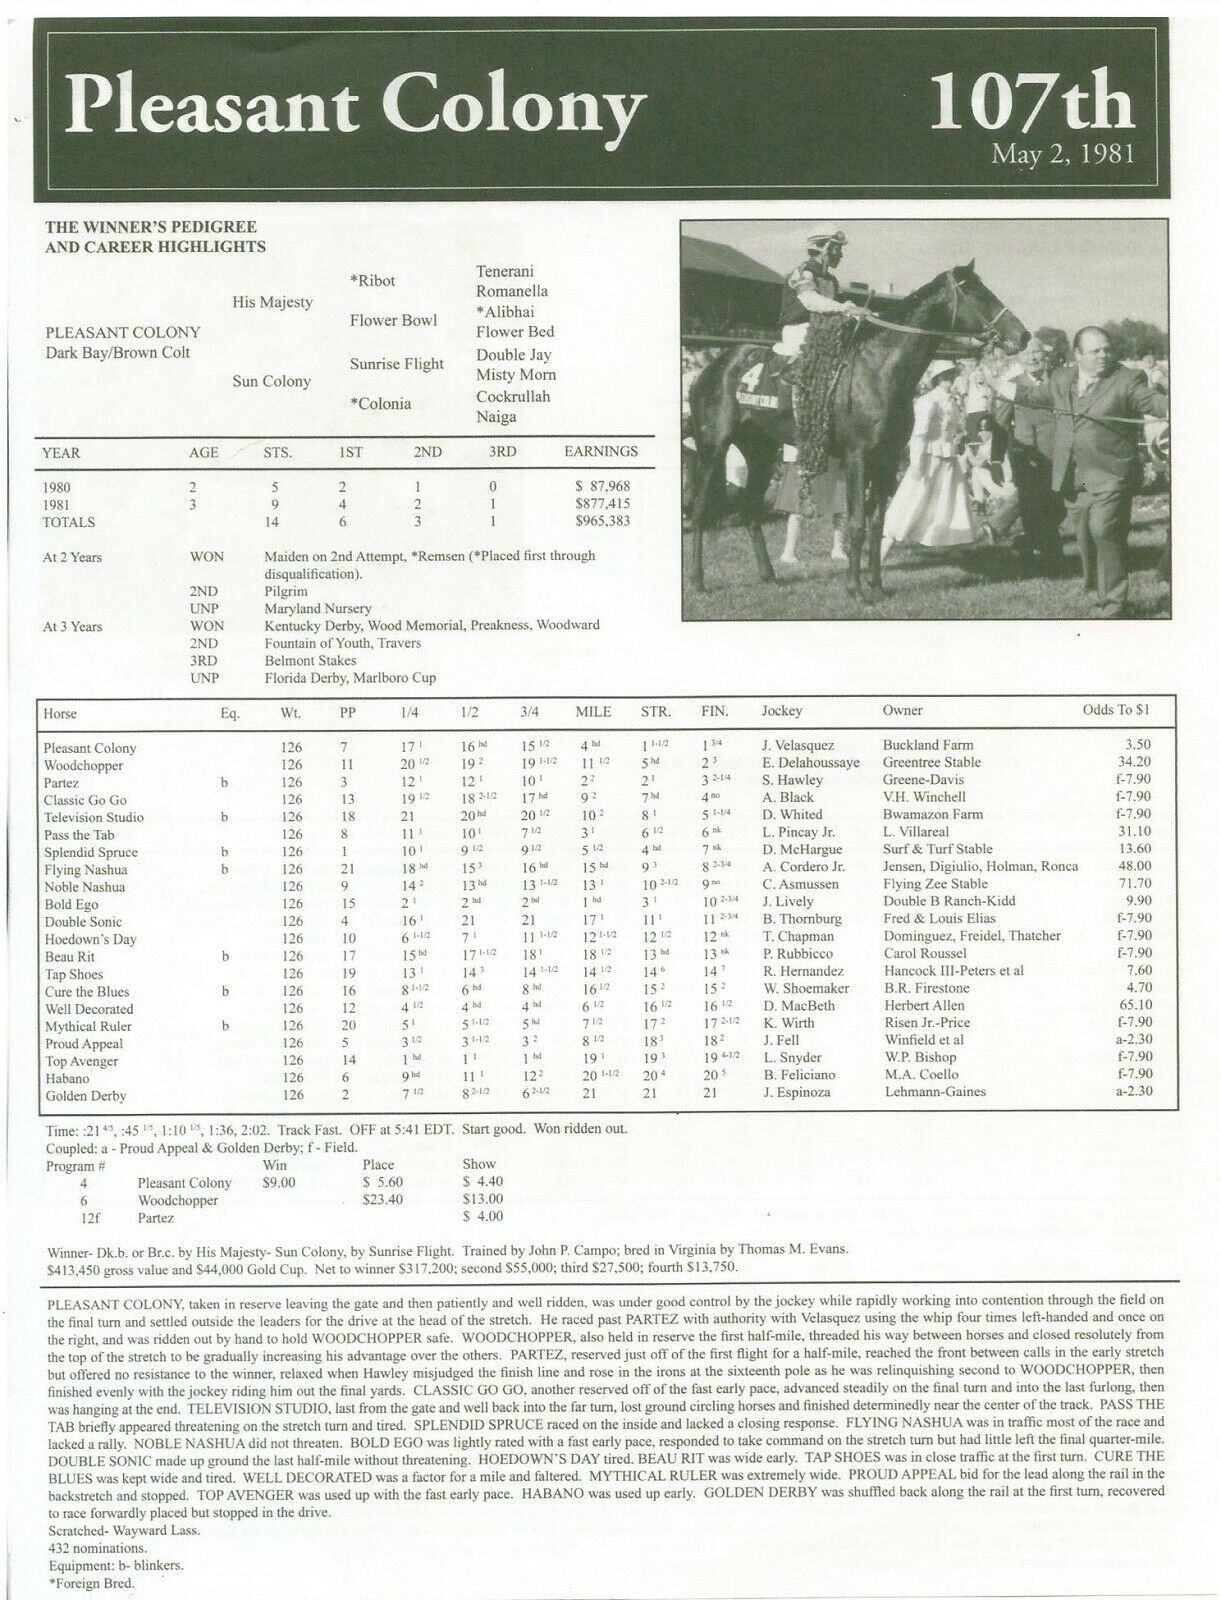 1981 PLEASANT COLONY Kentucky Derby Race Chart, Pedigree & Career